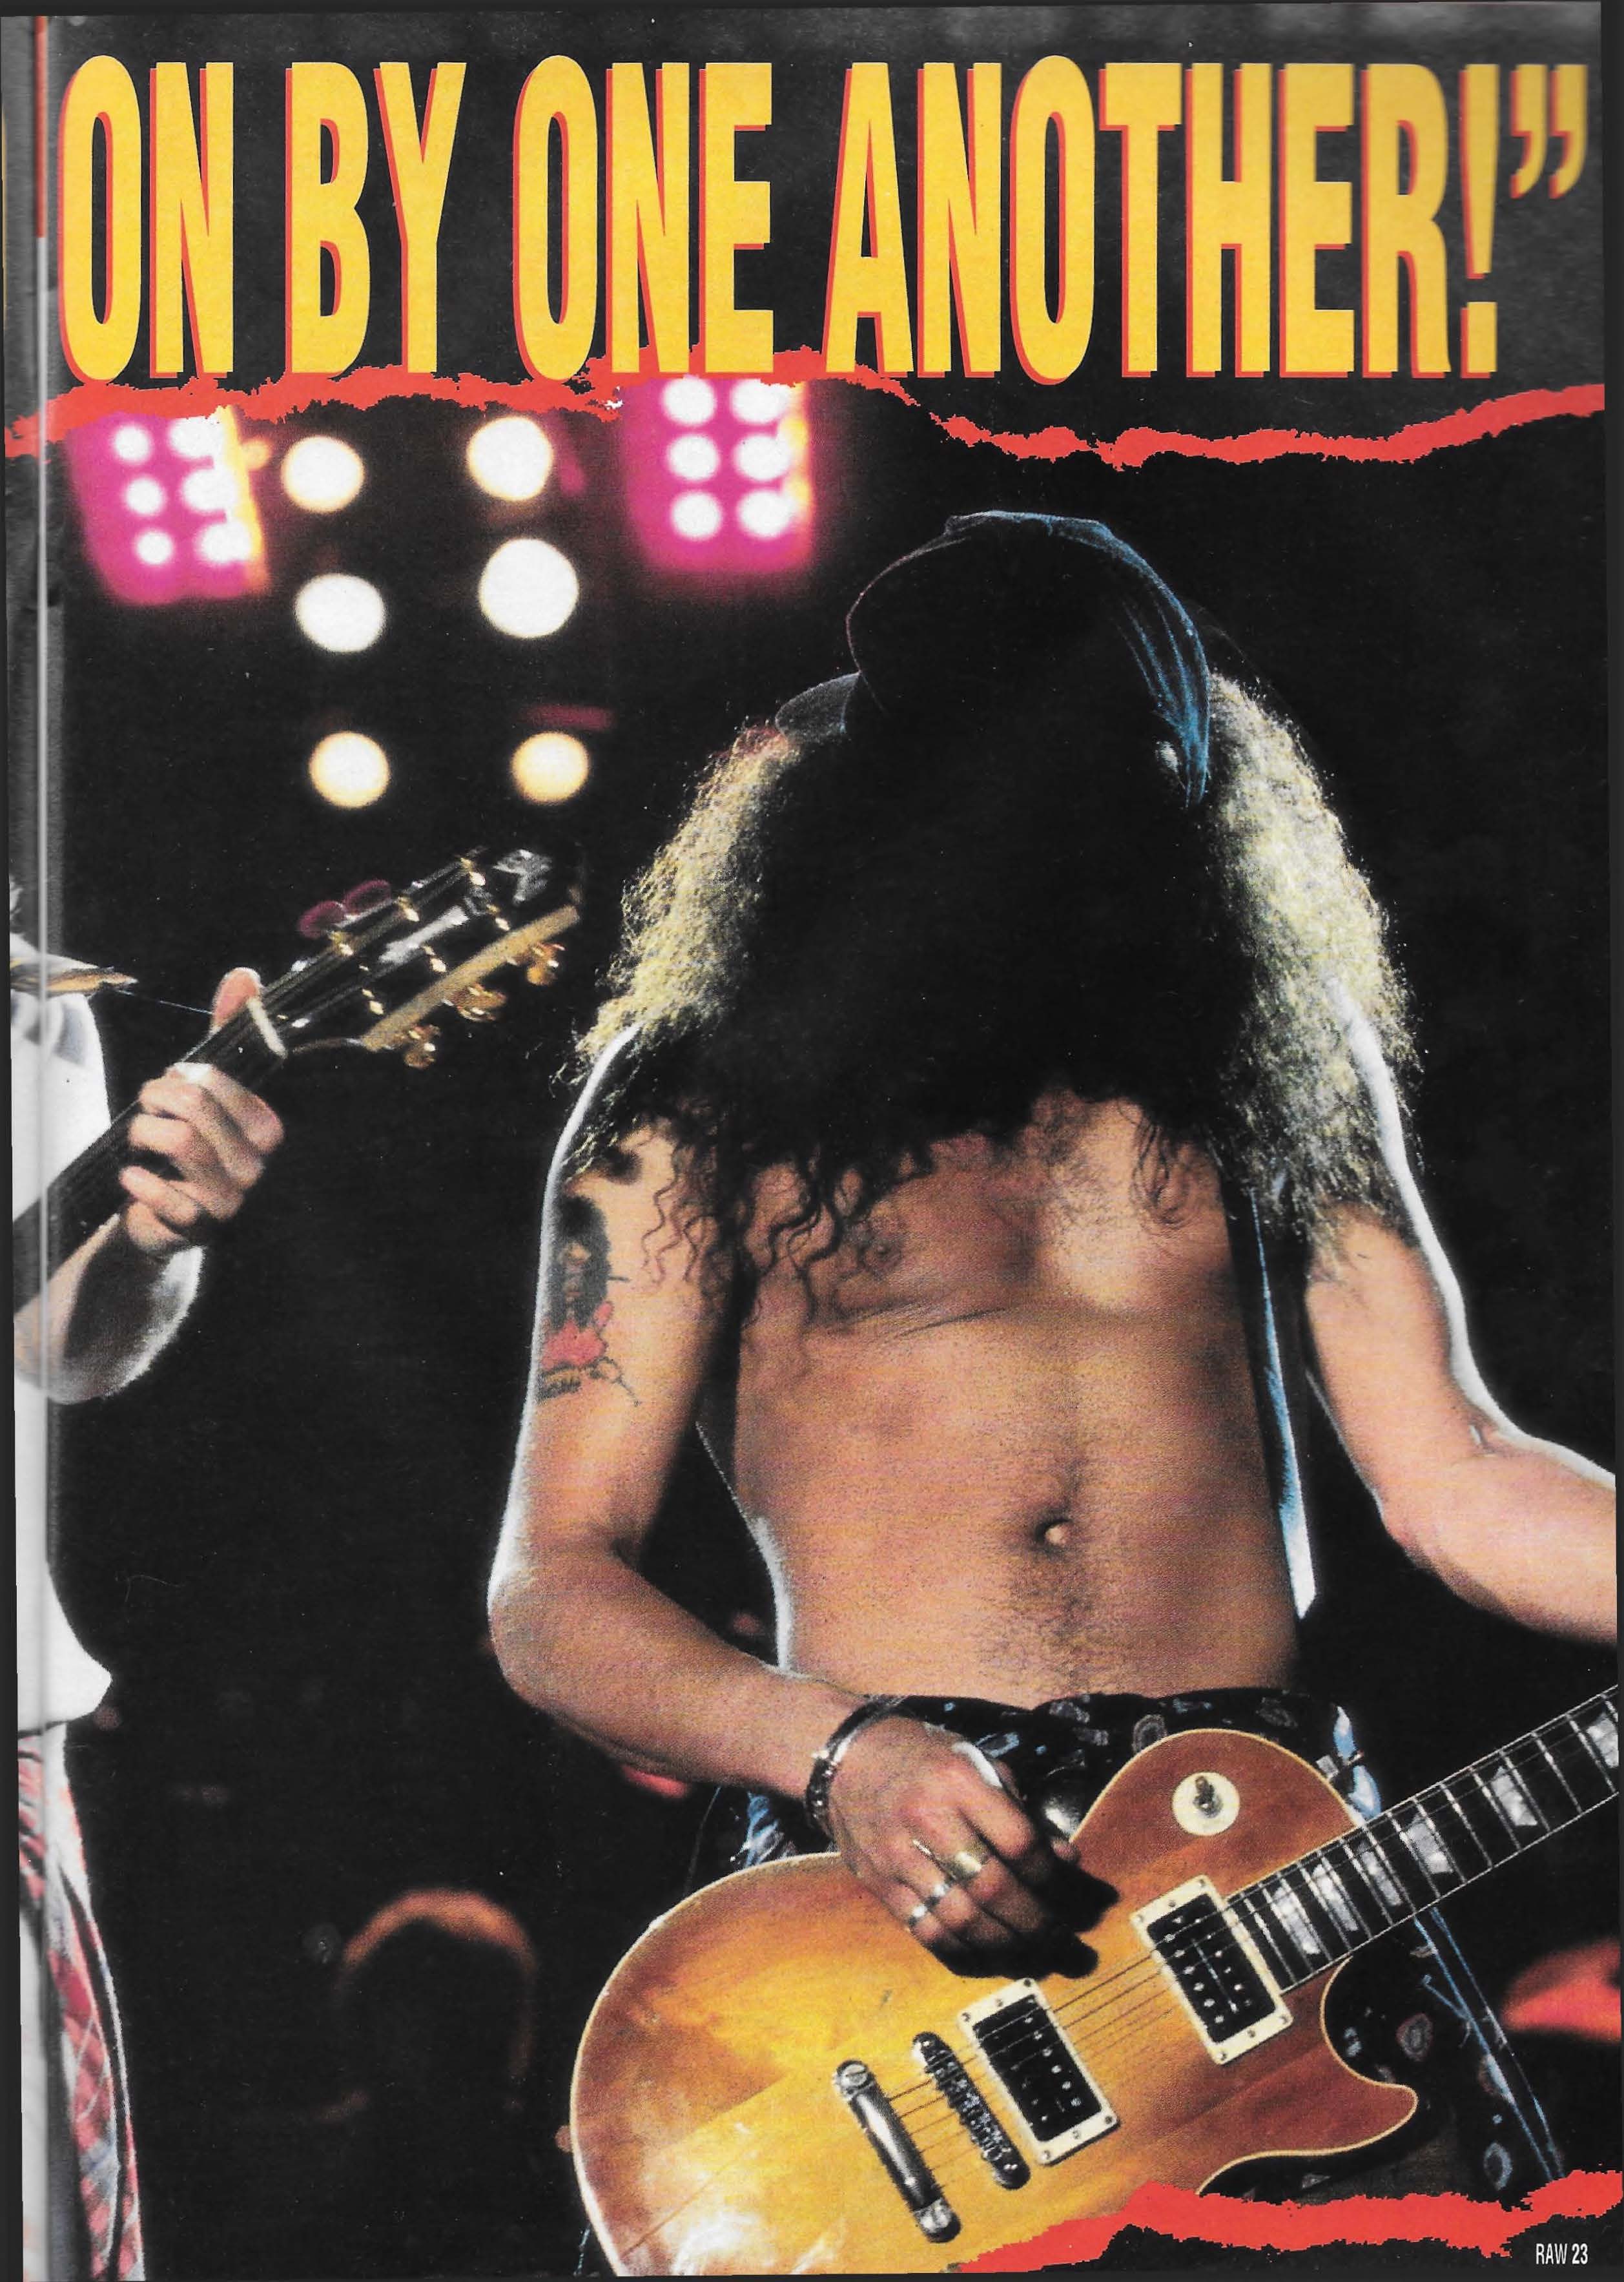 1993.06.23 - RAW magazine - "We're still turned on by one another" (Slash, Matt) RhFIutnW_o